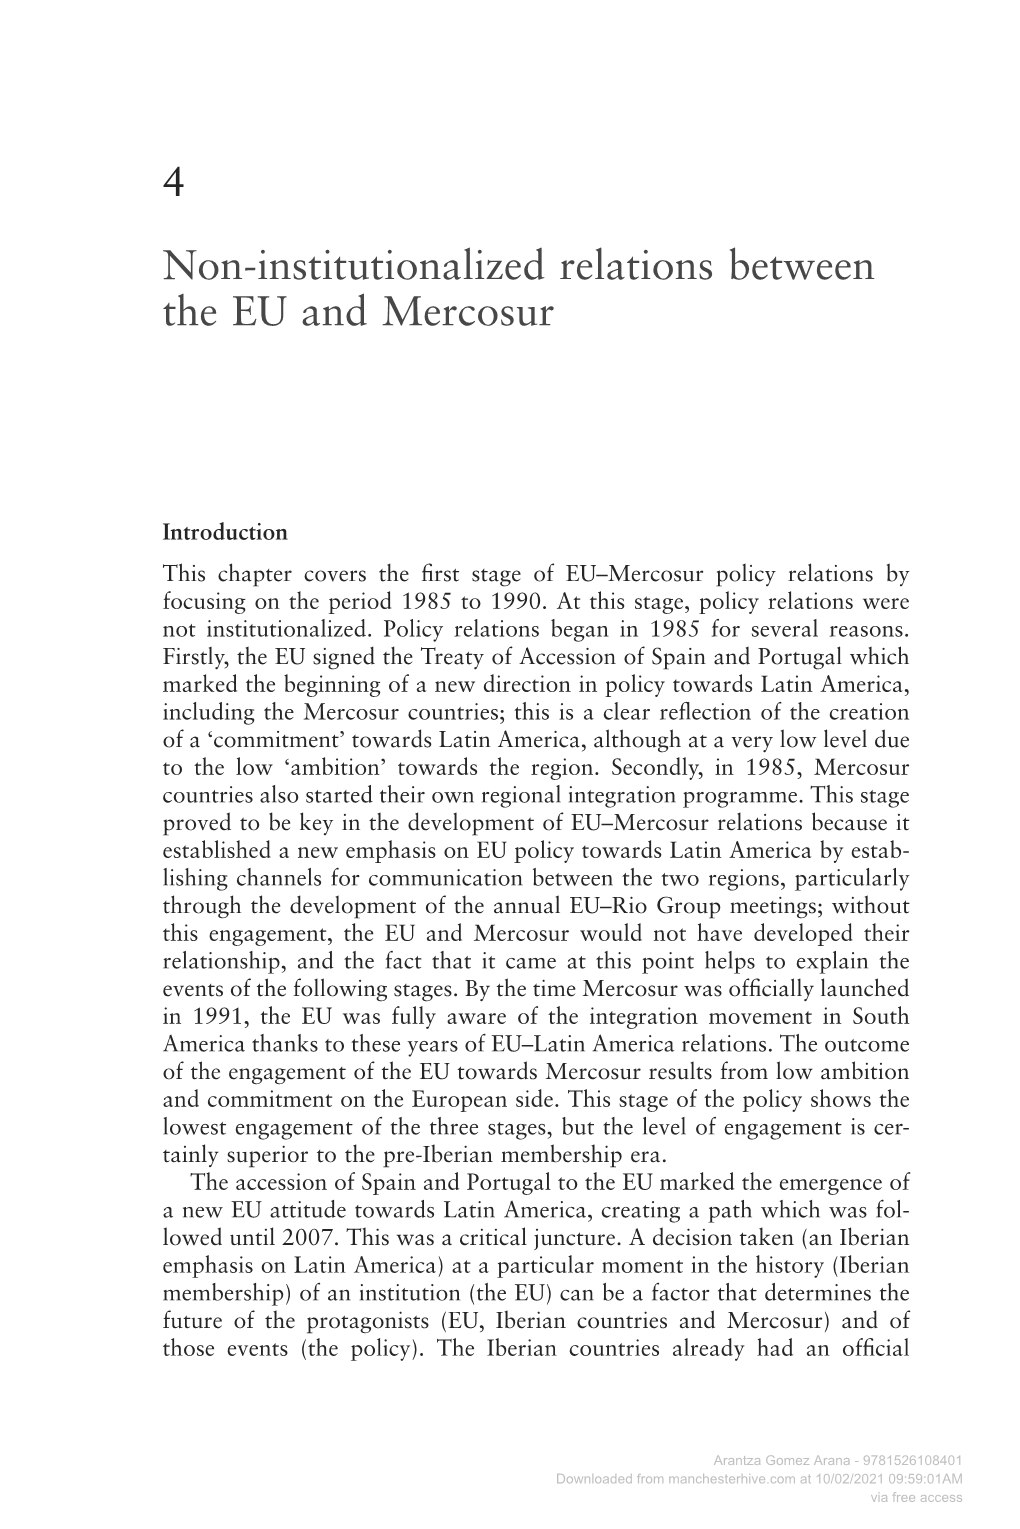 The European Union's Policy Towards Mercosur